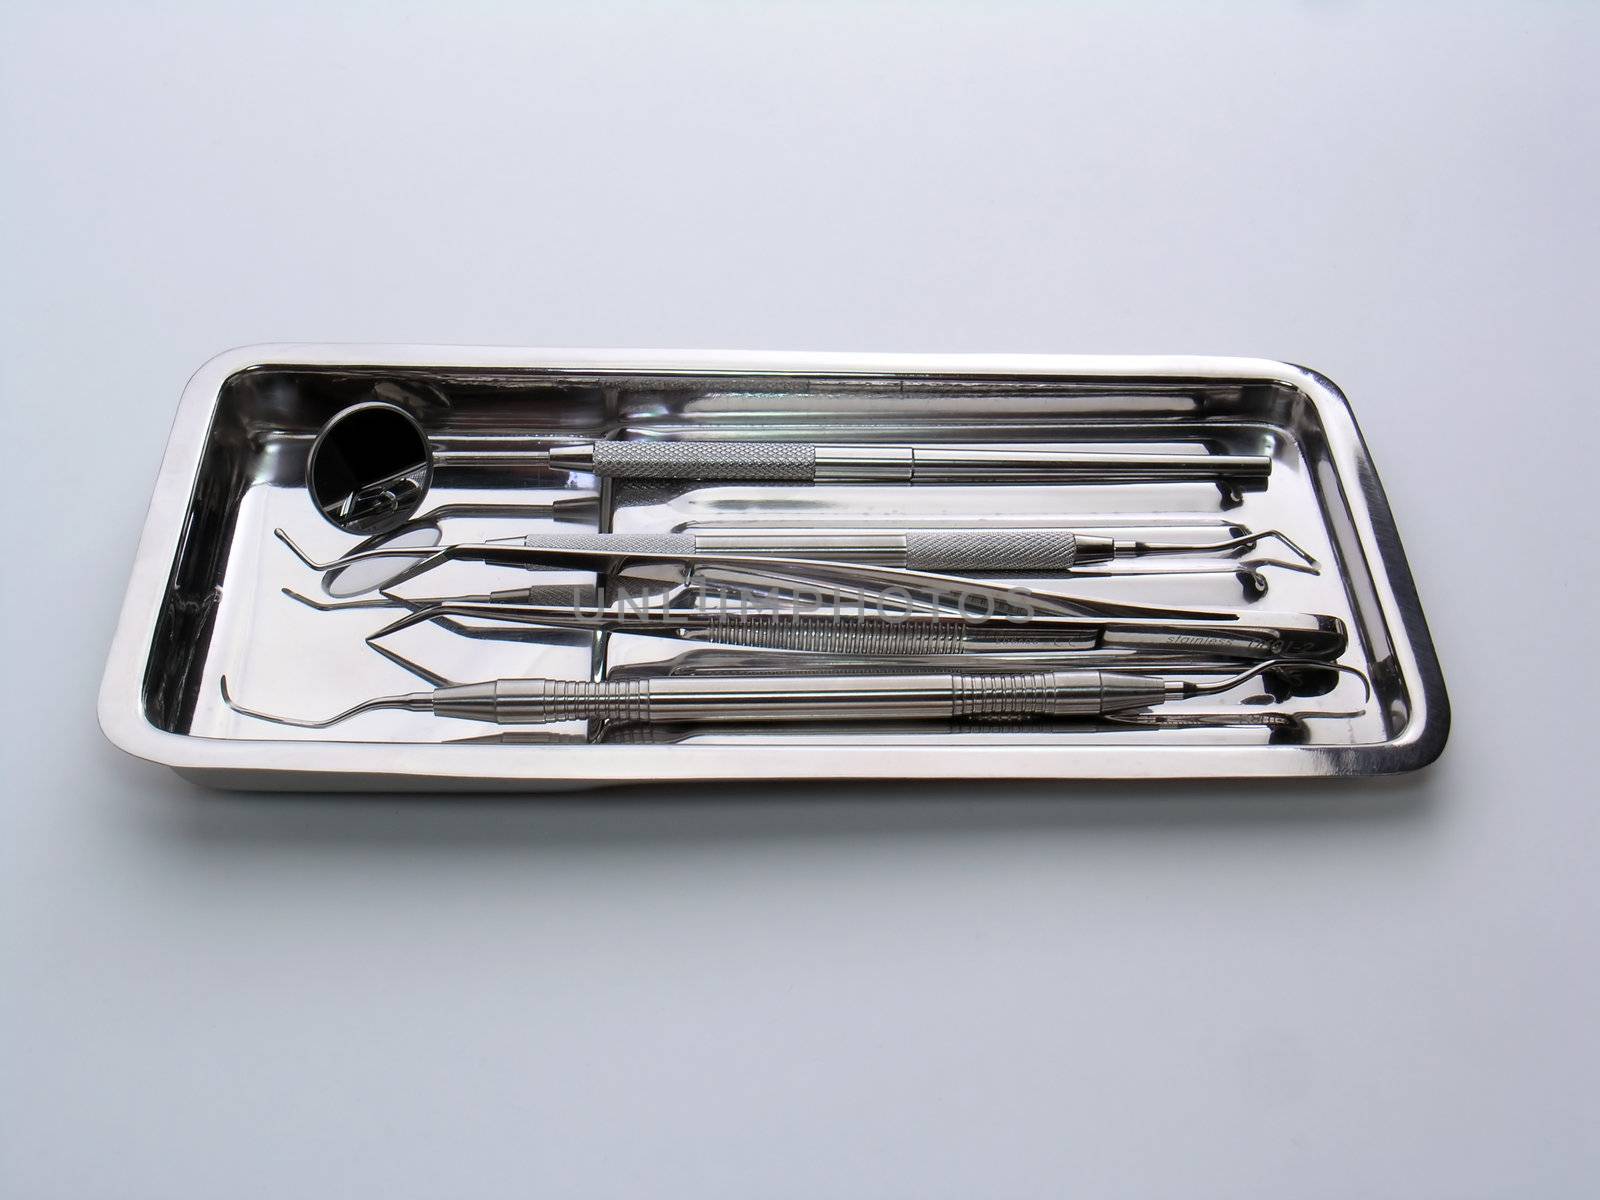 Close-up Dental Instruments on white background, metal, iron, steel, mirror